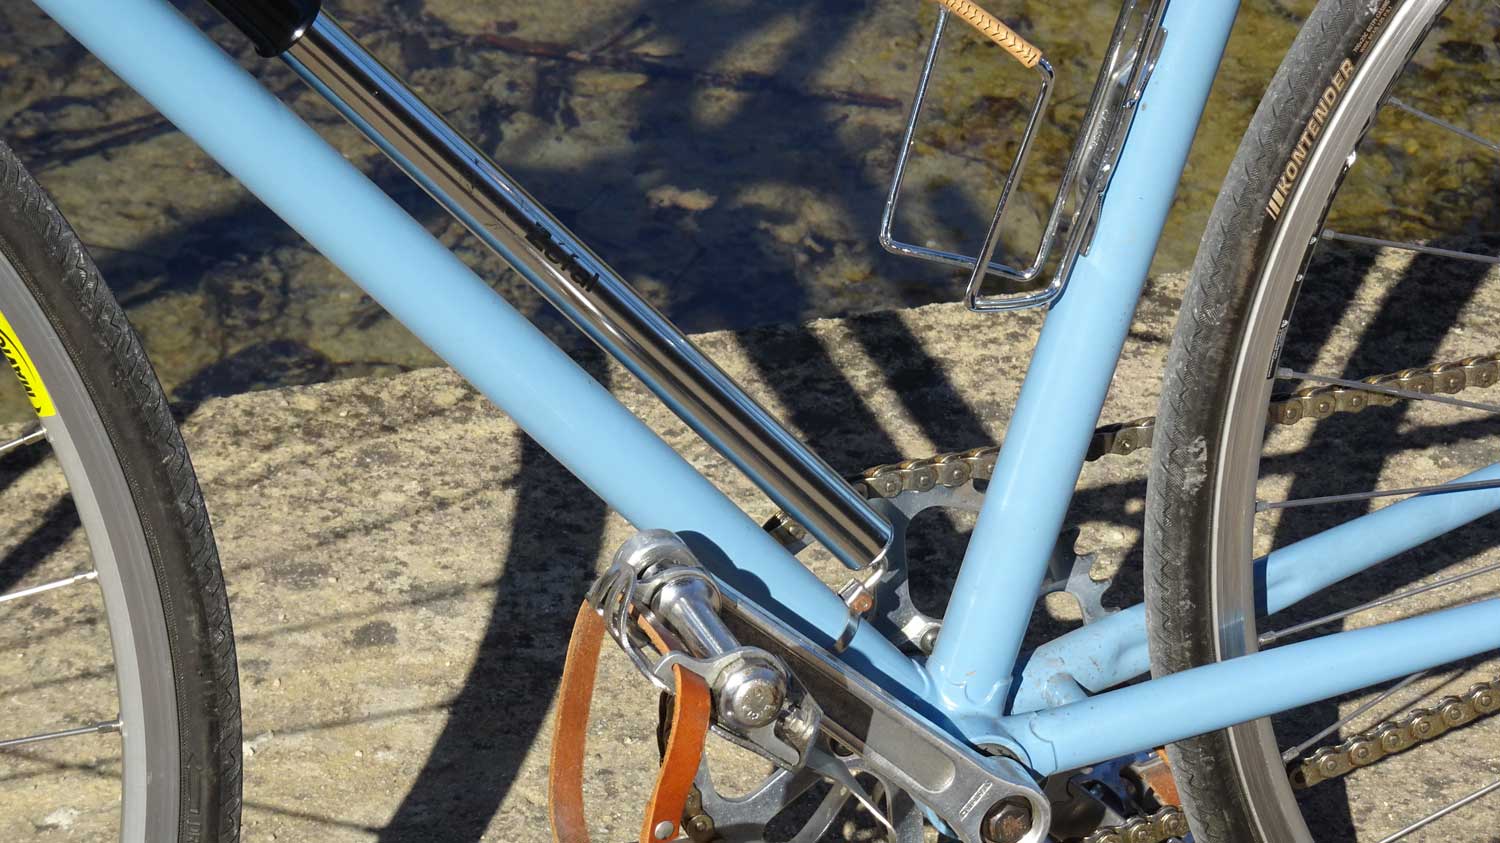 Porte bidon de vélo Zefal en aluminium vintage ancien rétro  #8045 Z21